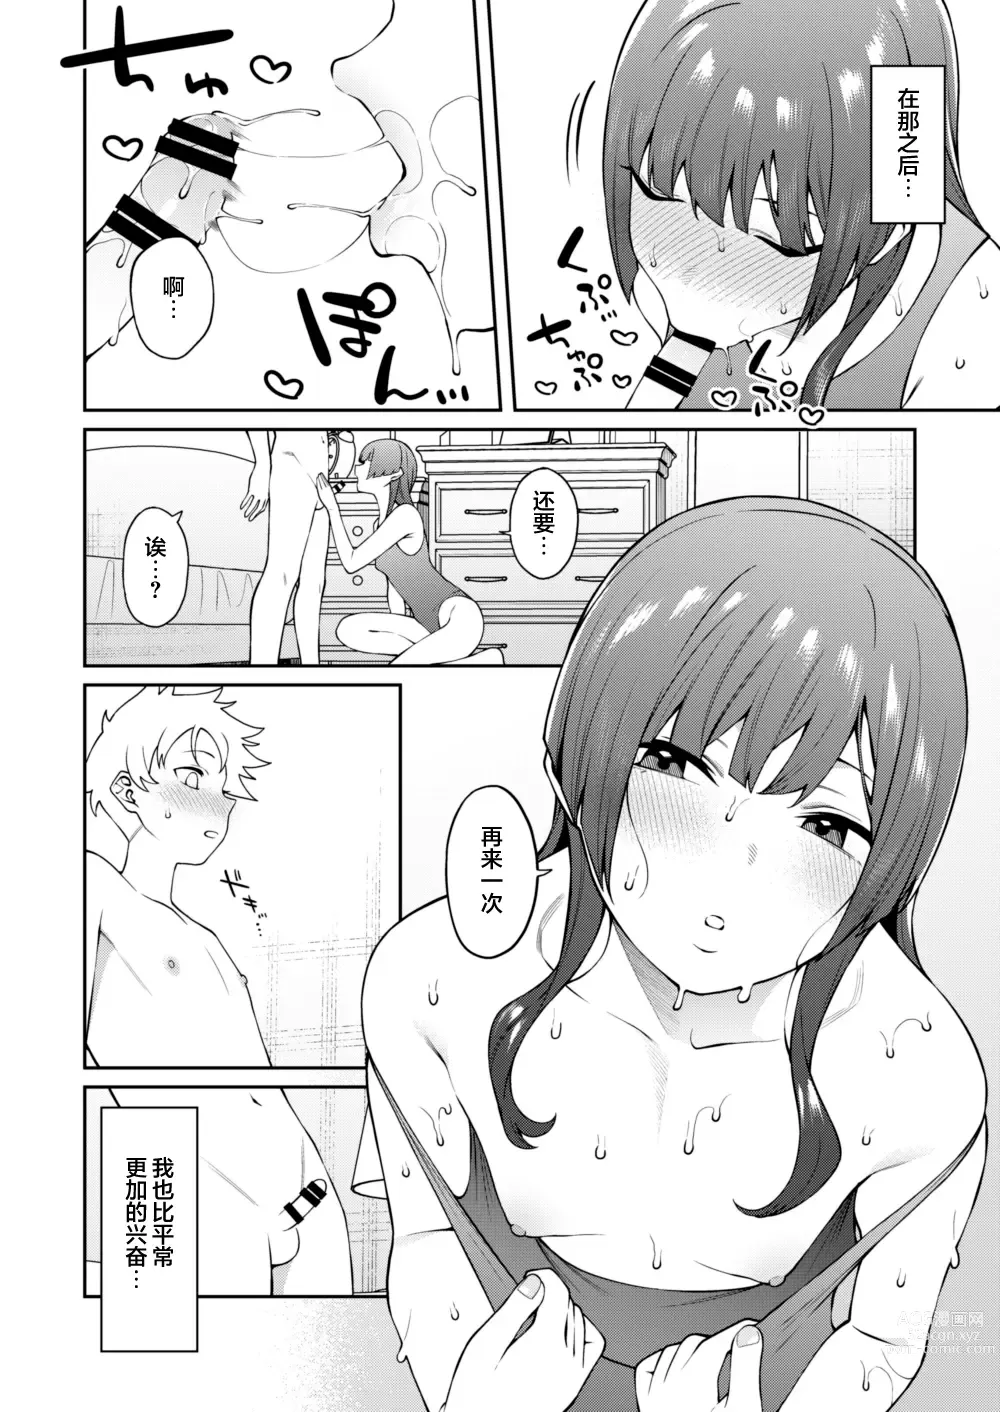 Page 19 of doujinshi Sumire-chan ha atama ga ii.